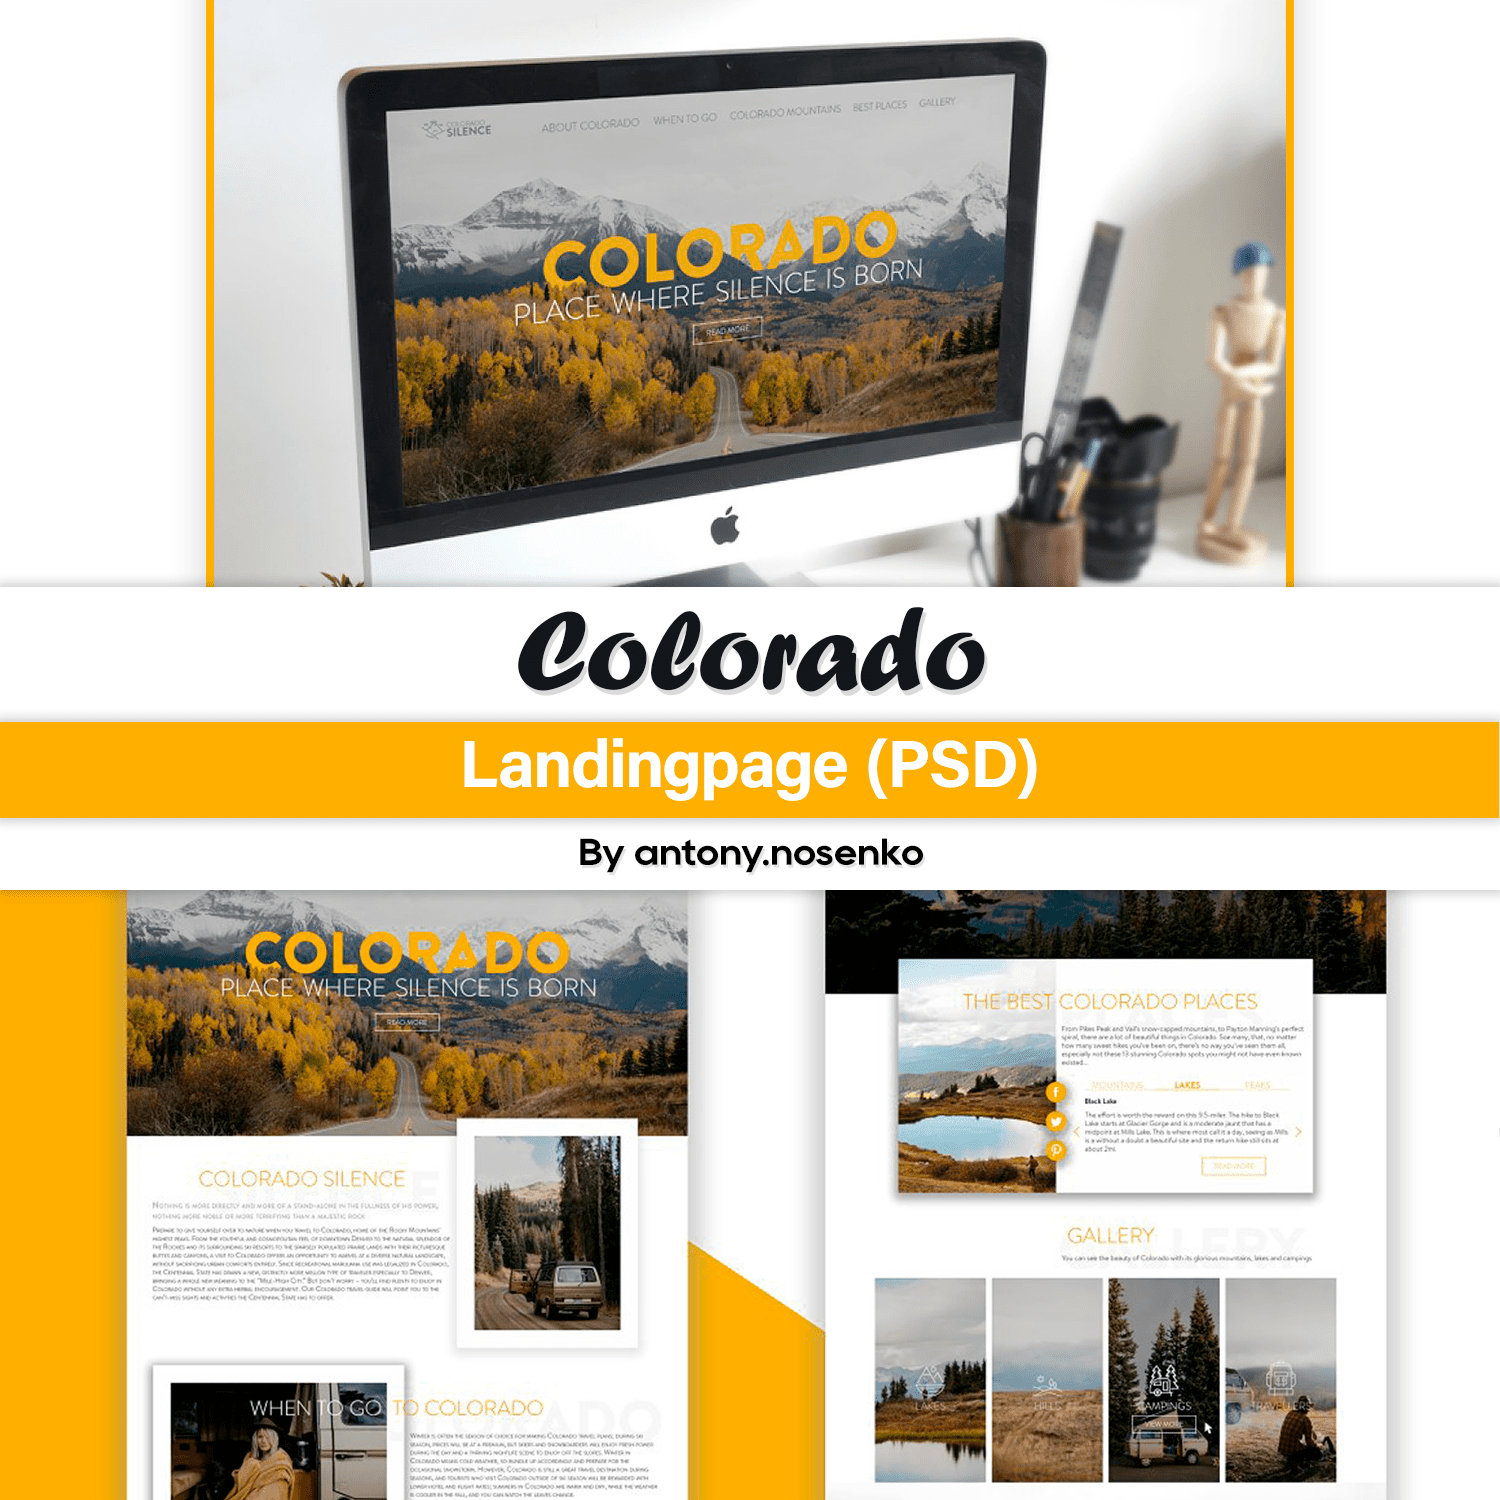 Colorado Landingpage (PSD) cover.